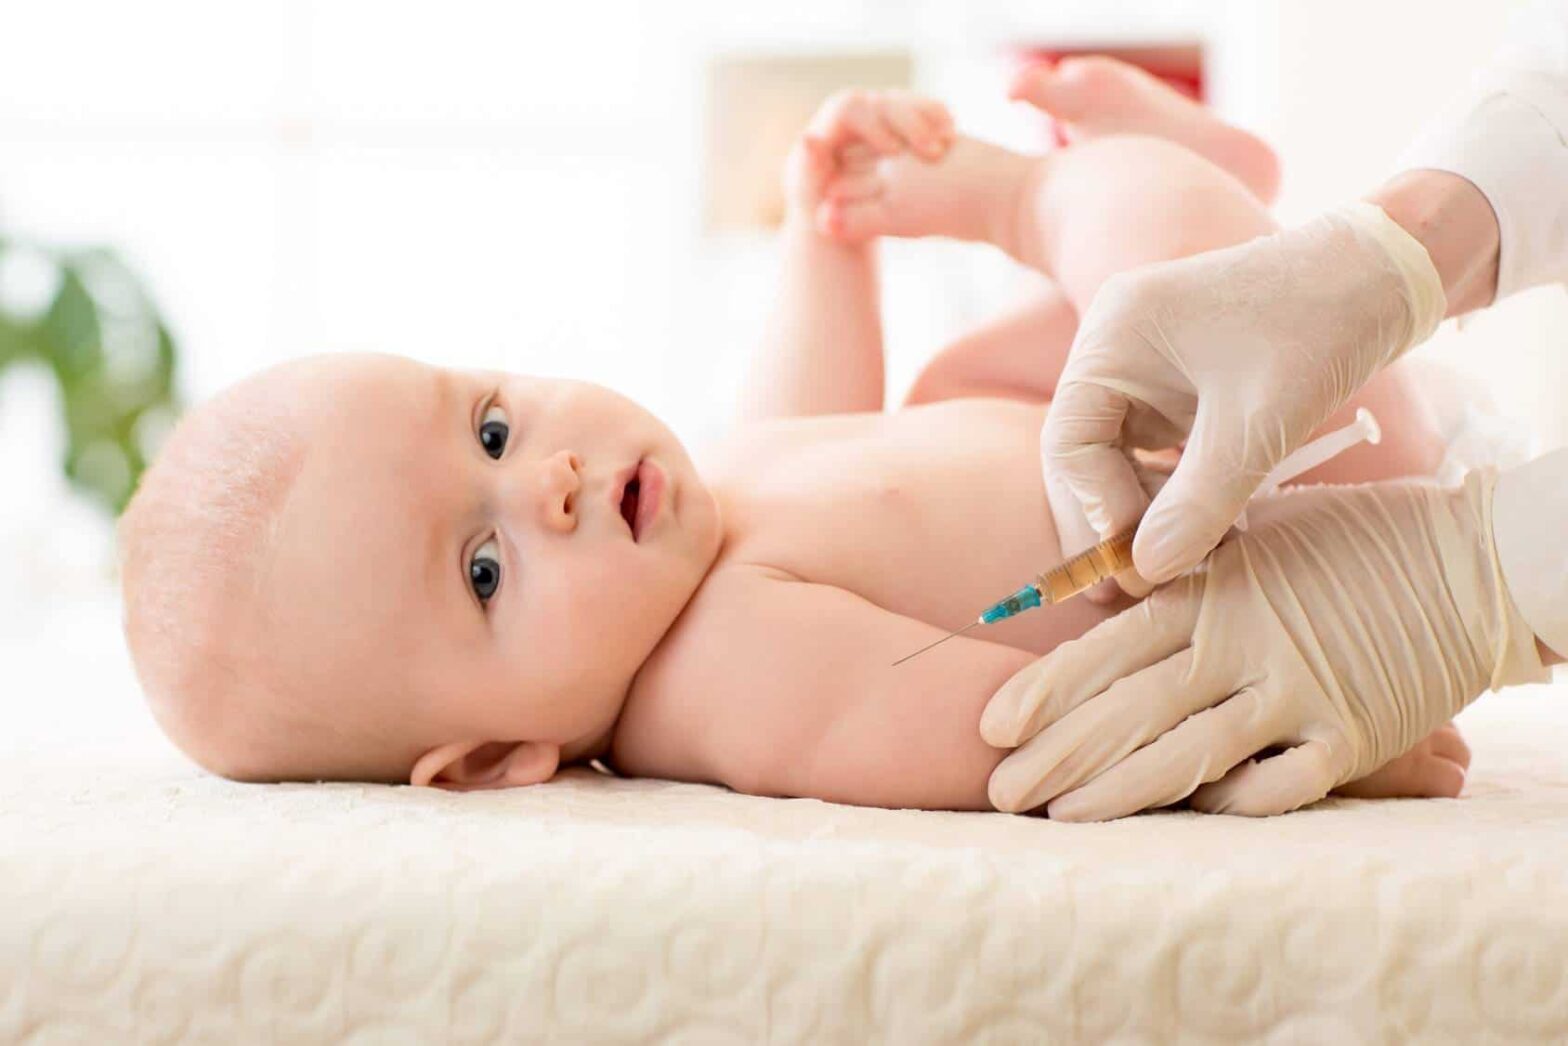 Global Paediatric Vaccine Industry